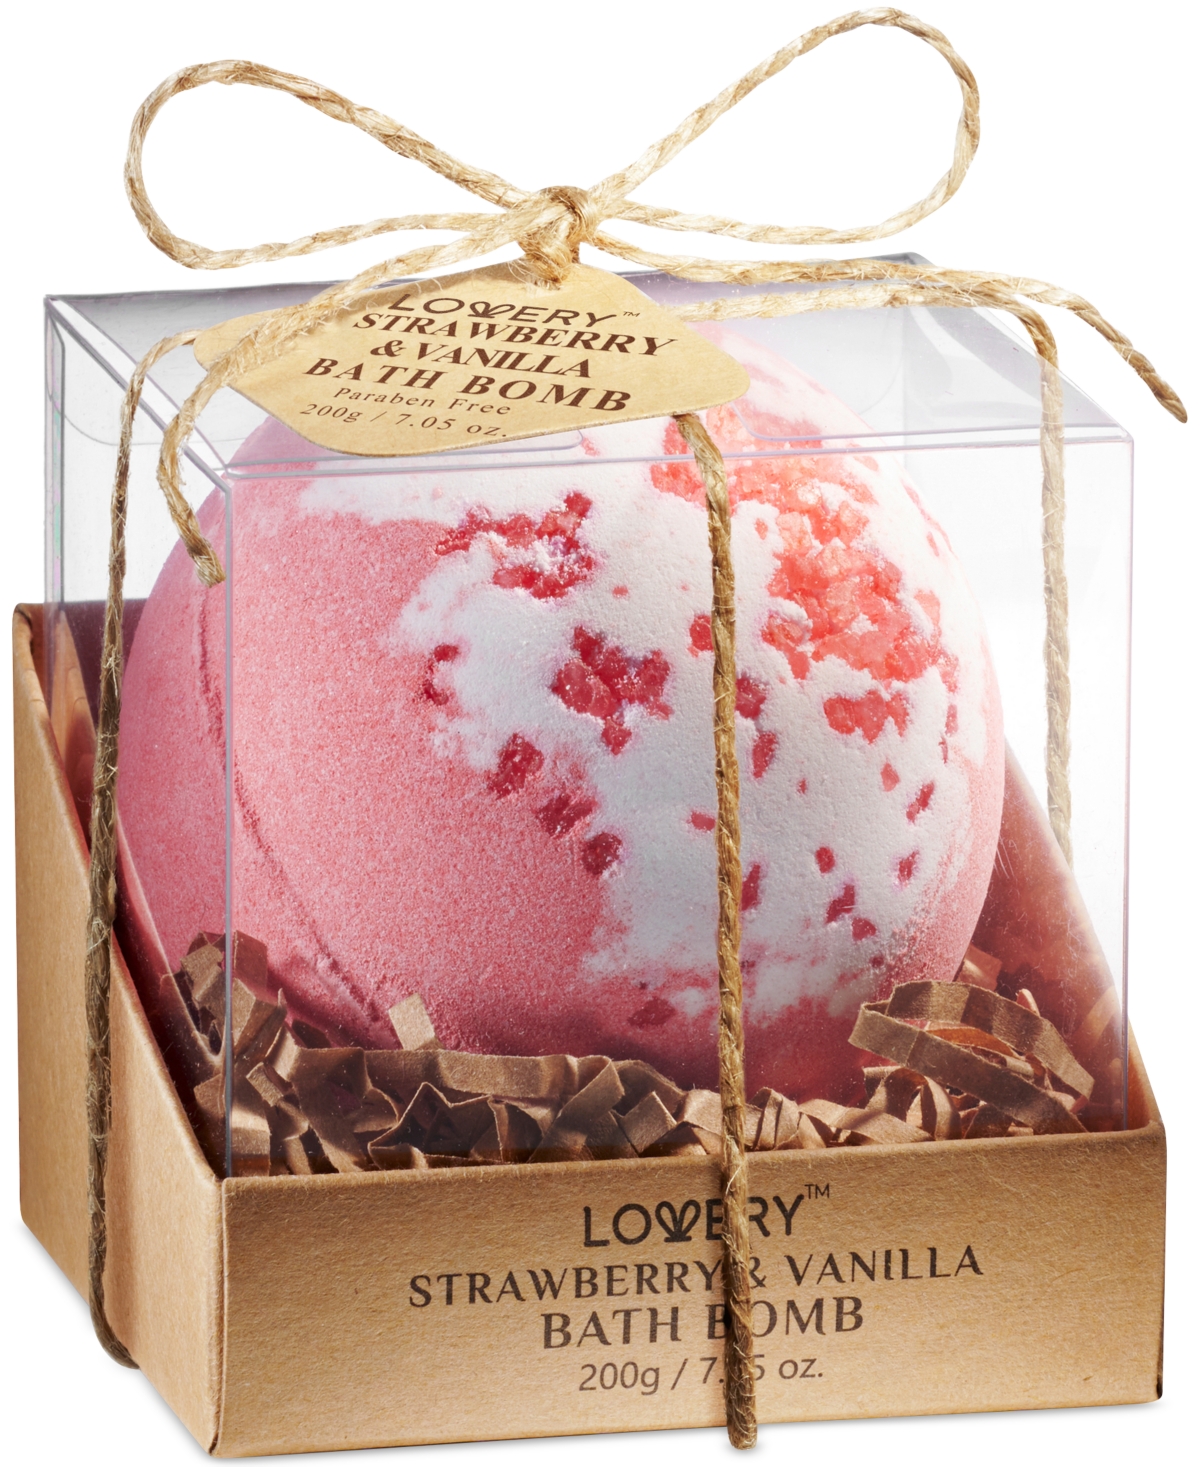 Lovery Strawberry & Vanilla Fizzy Bath Bomb, 7 Oz.